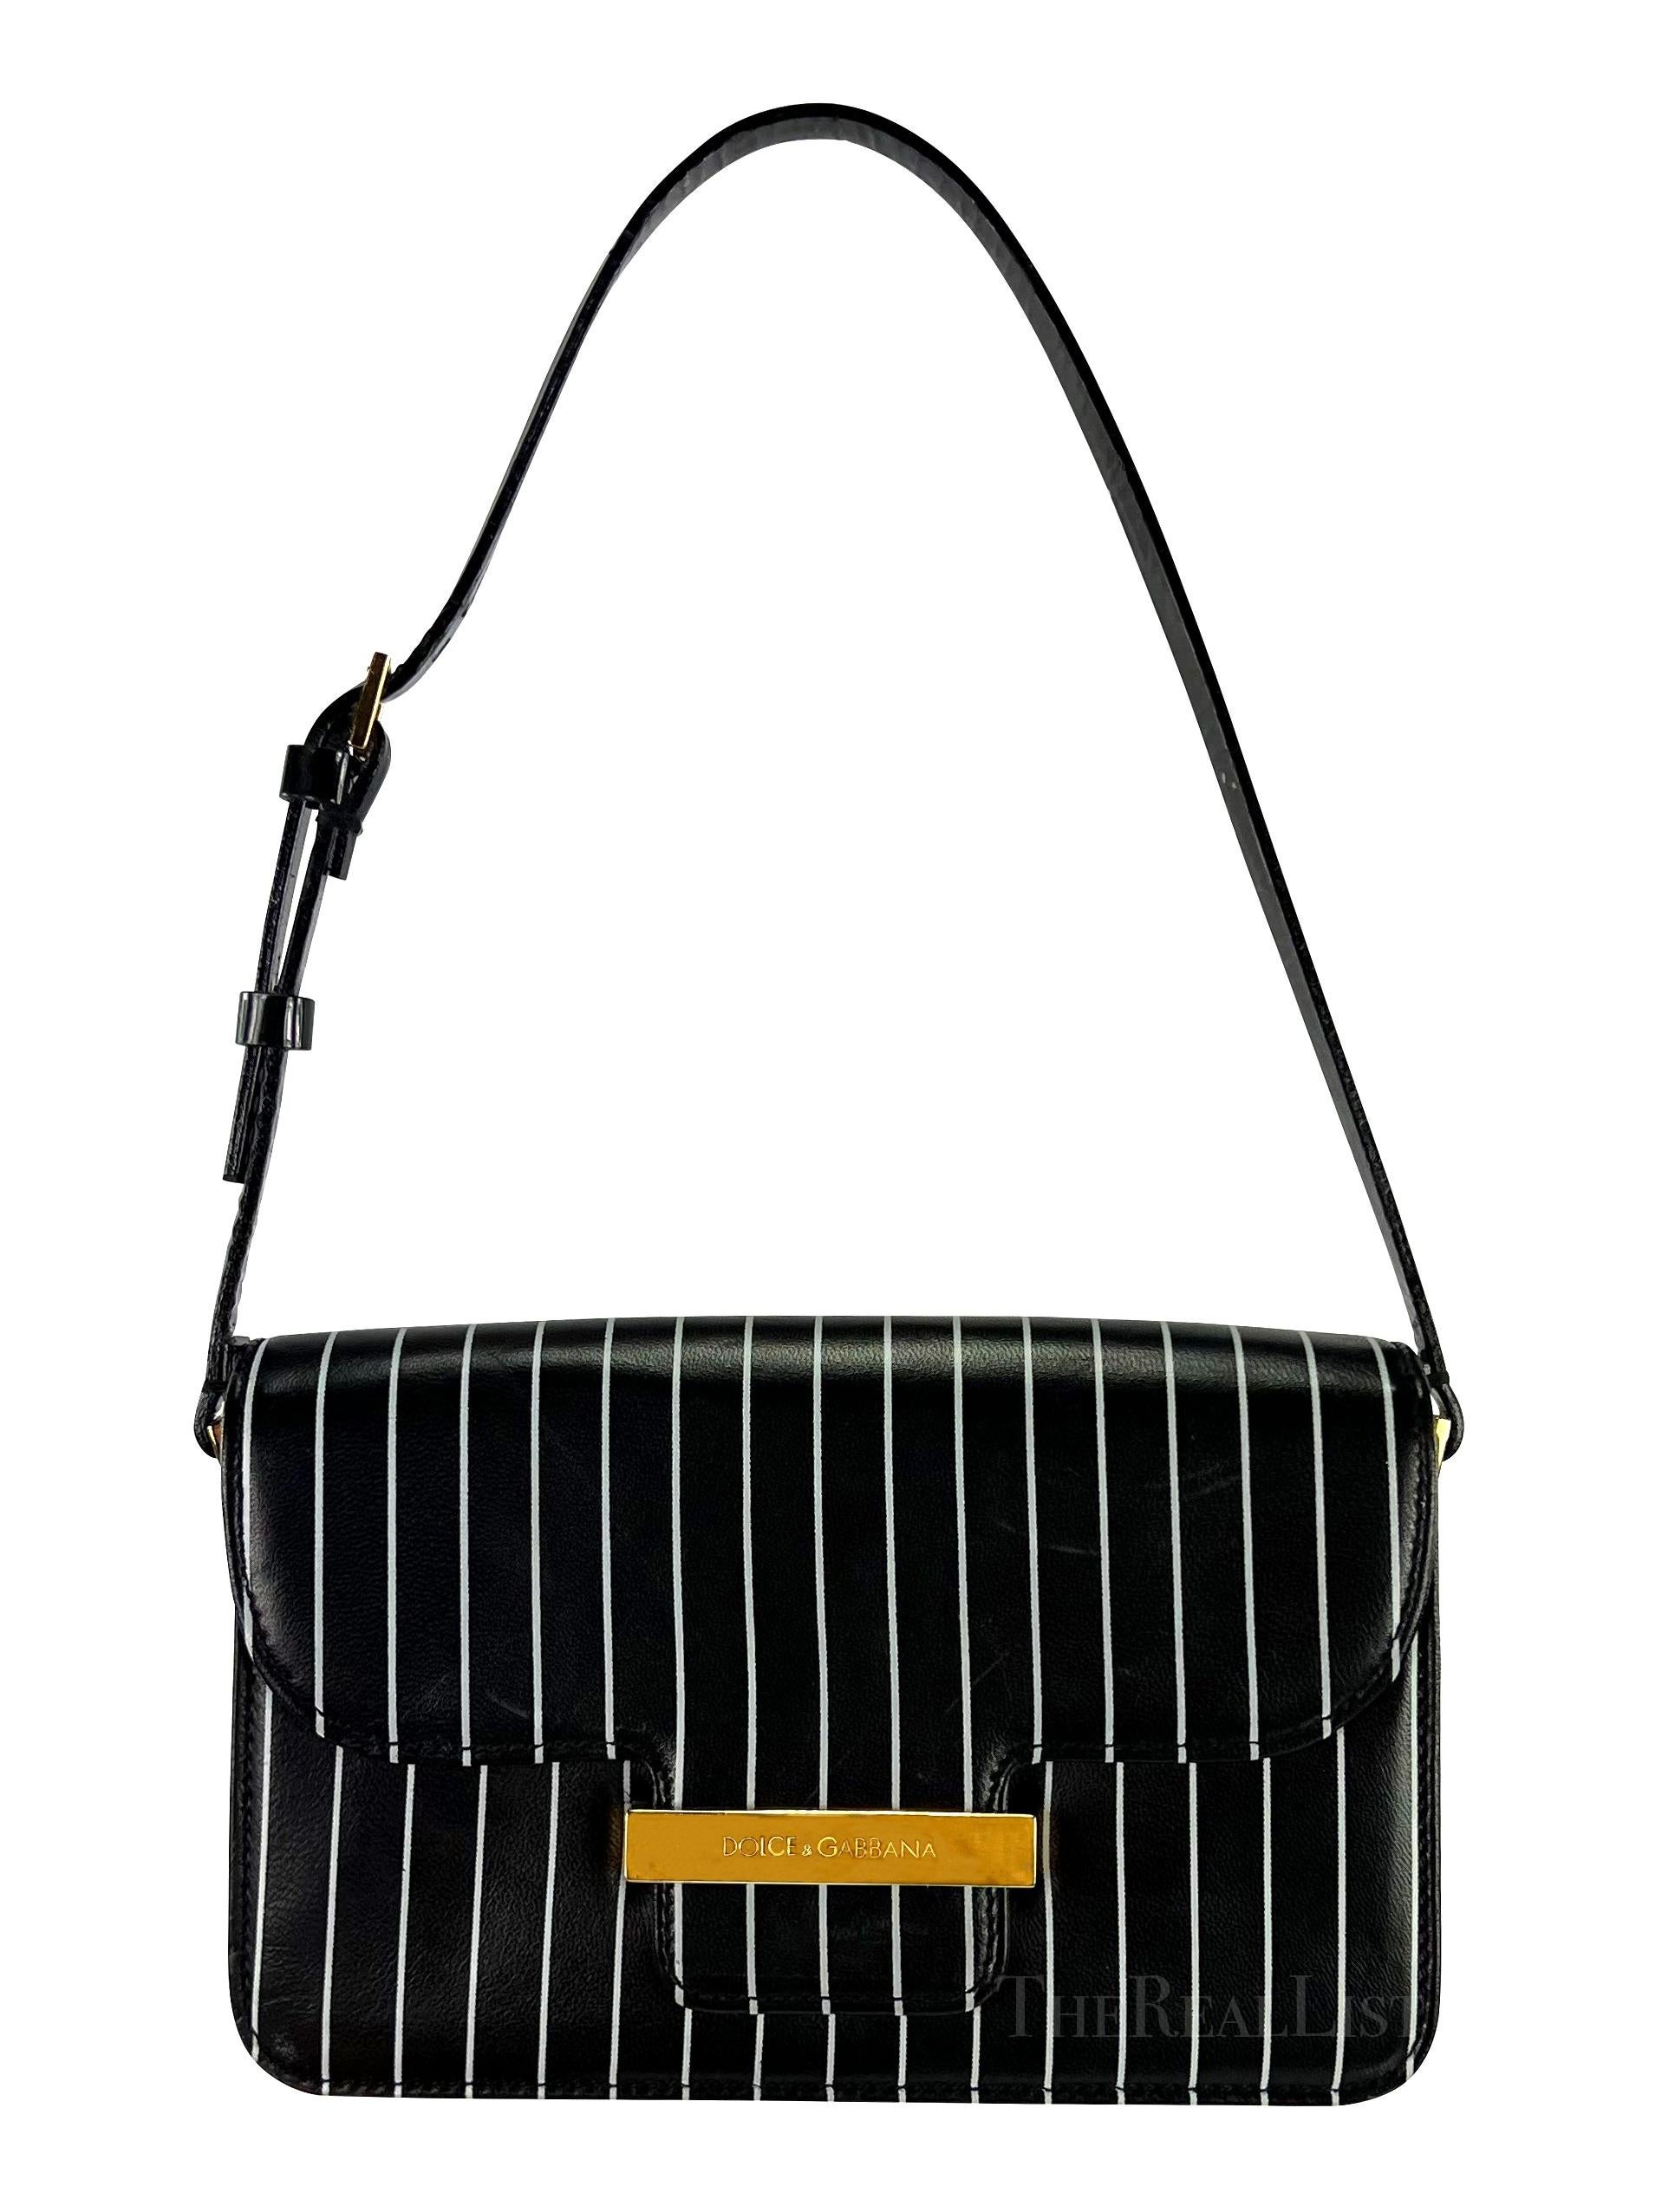 S/S 2001 Dolce & Gabbana Runway Black Pinstripe Leather Patent Mini Shoulder Bag For Sale